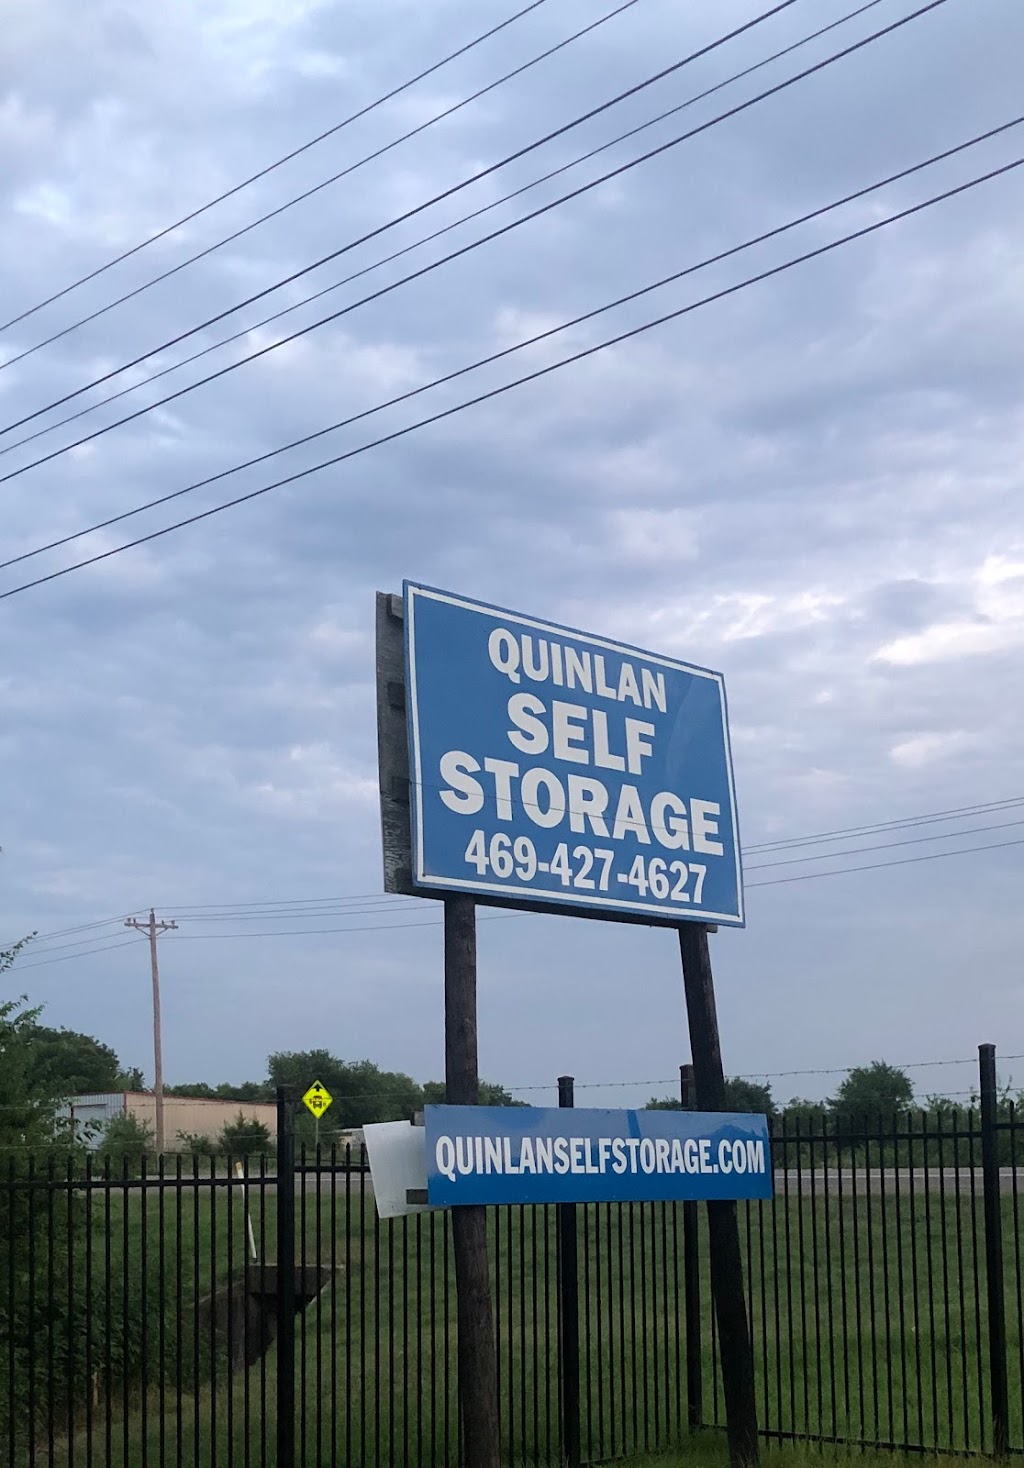 Quinlan Self Storage | 1776 E Quinlan Pkwy, Quinlan, TX 75474, USA | Phone: (469) 427-4627